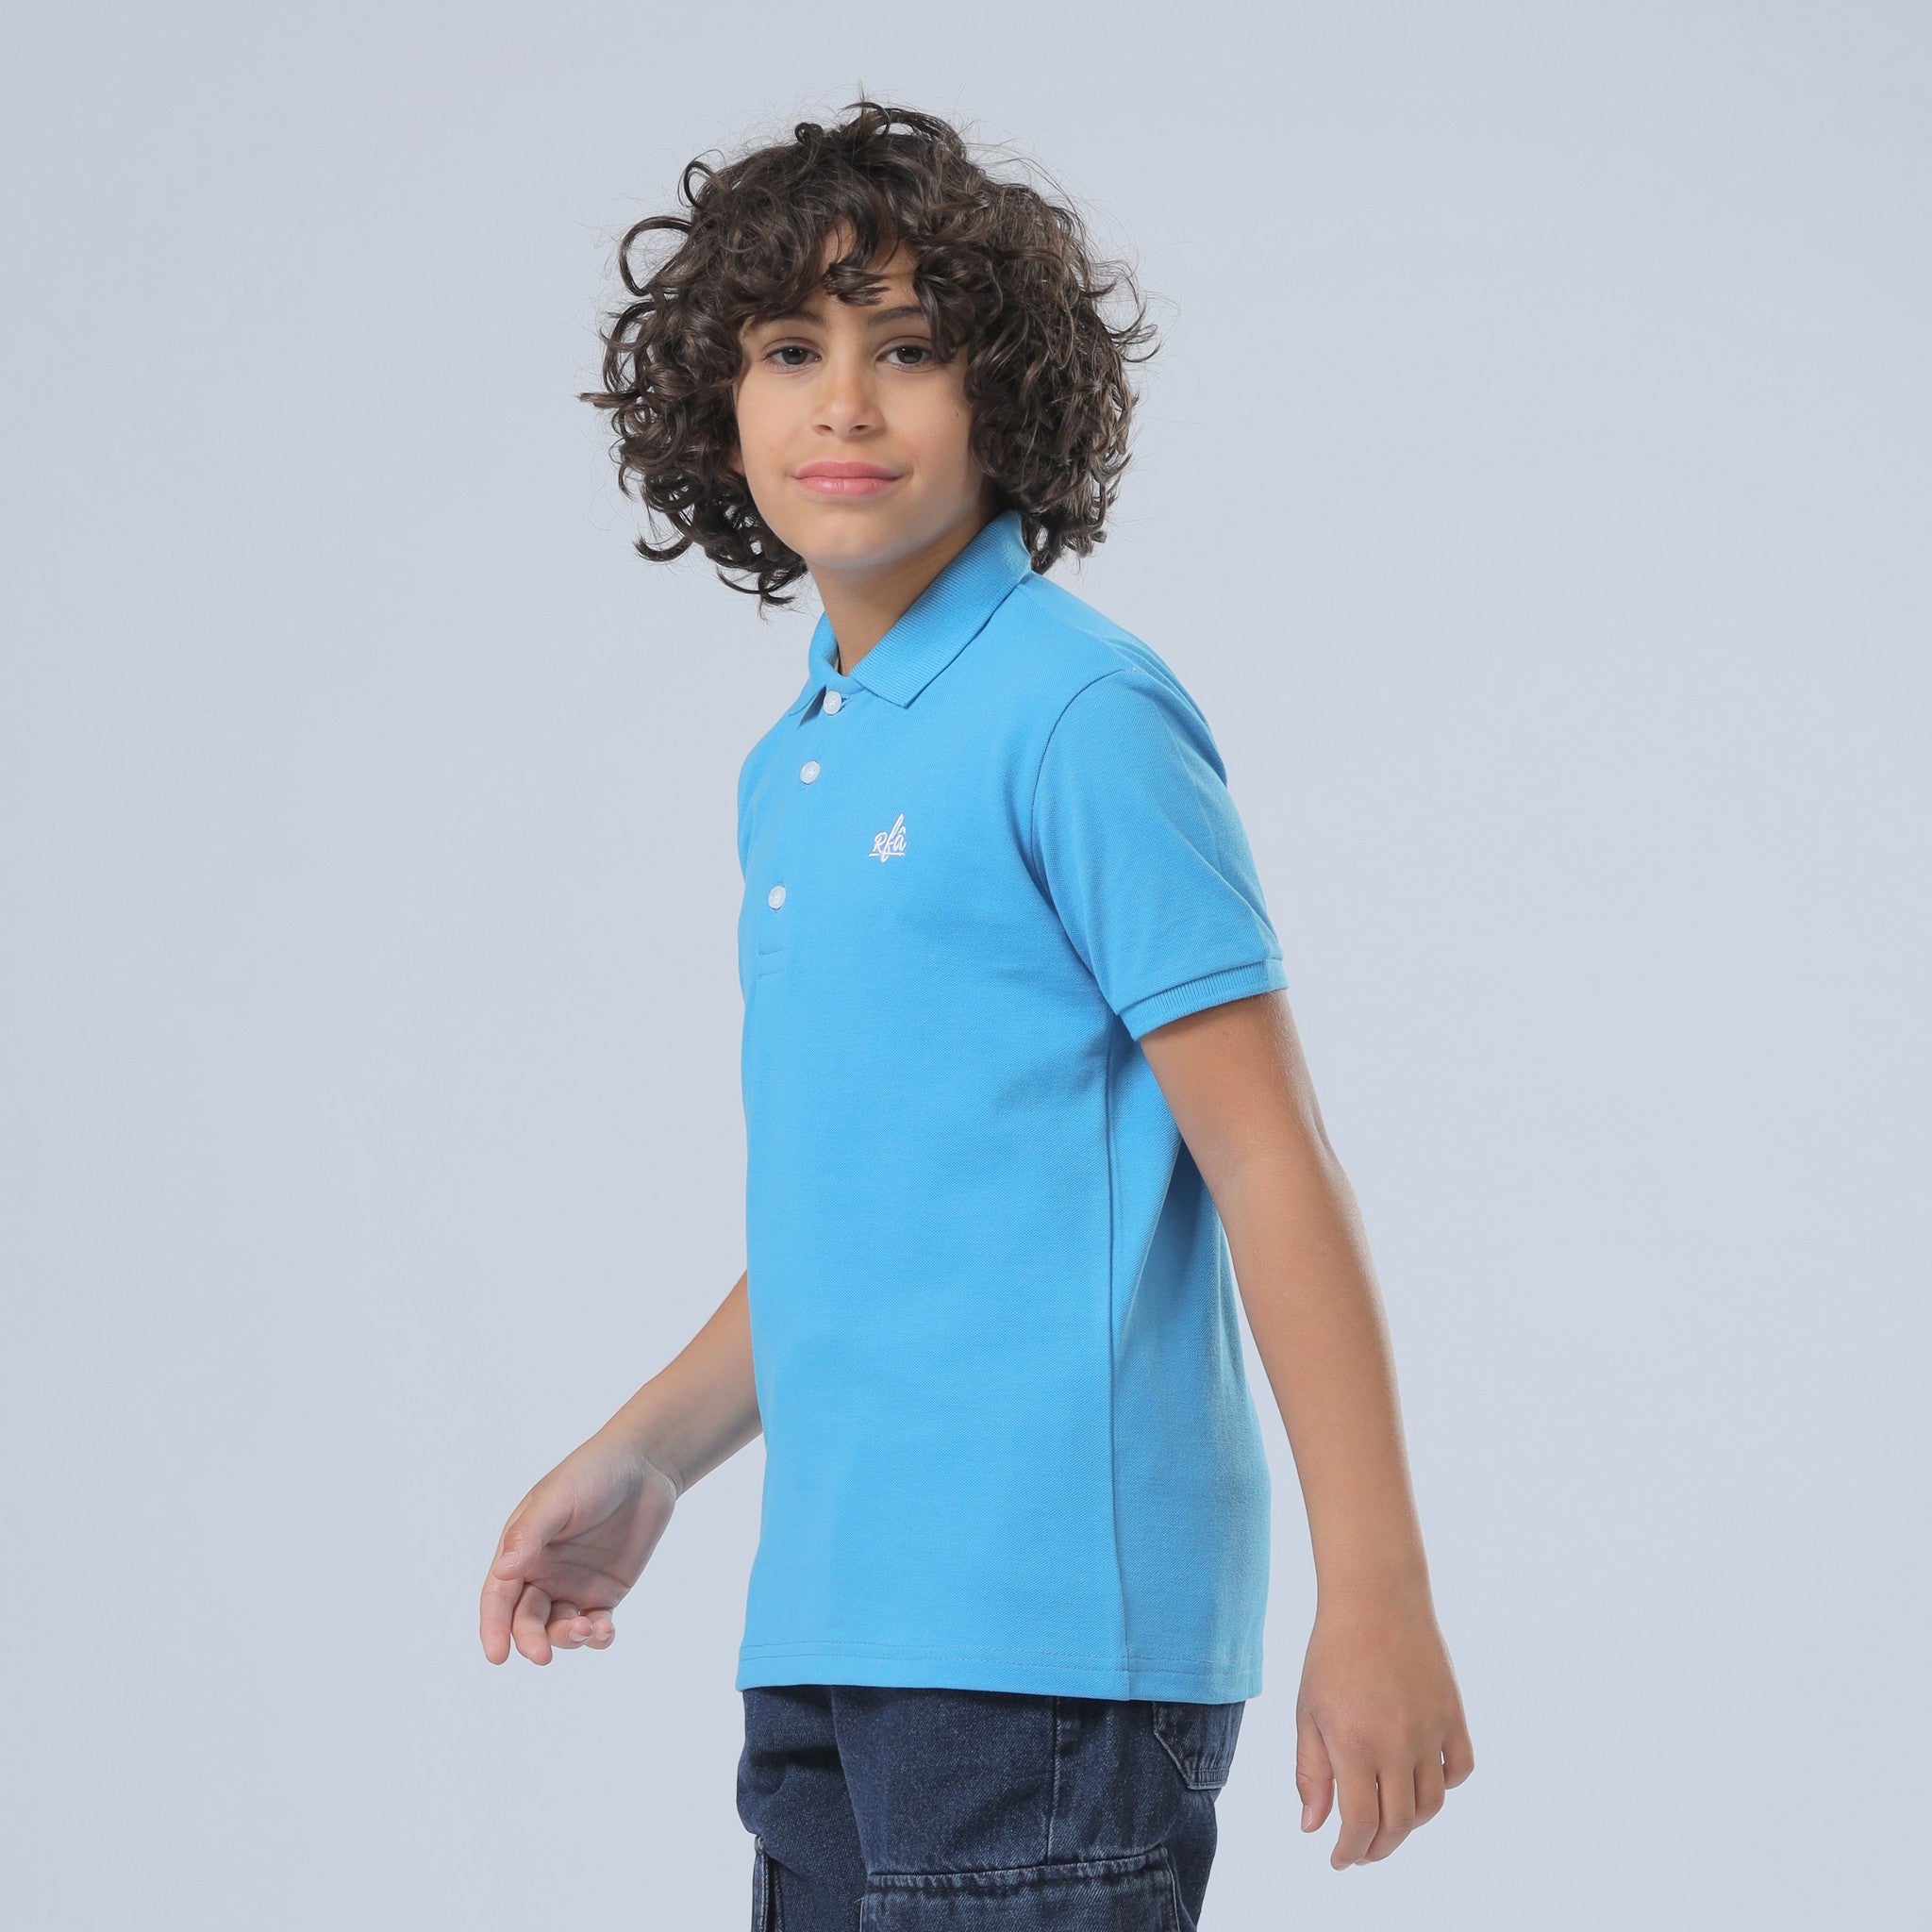 Rfa Blue Polo Shirt